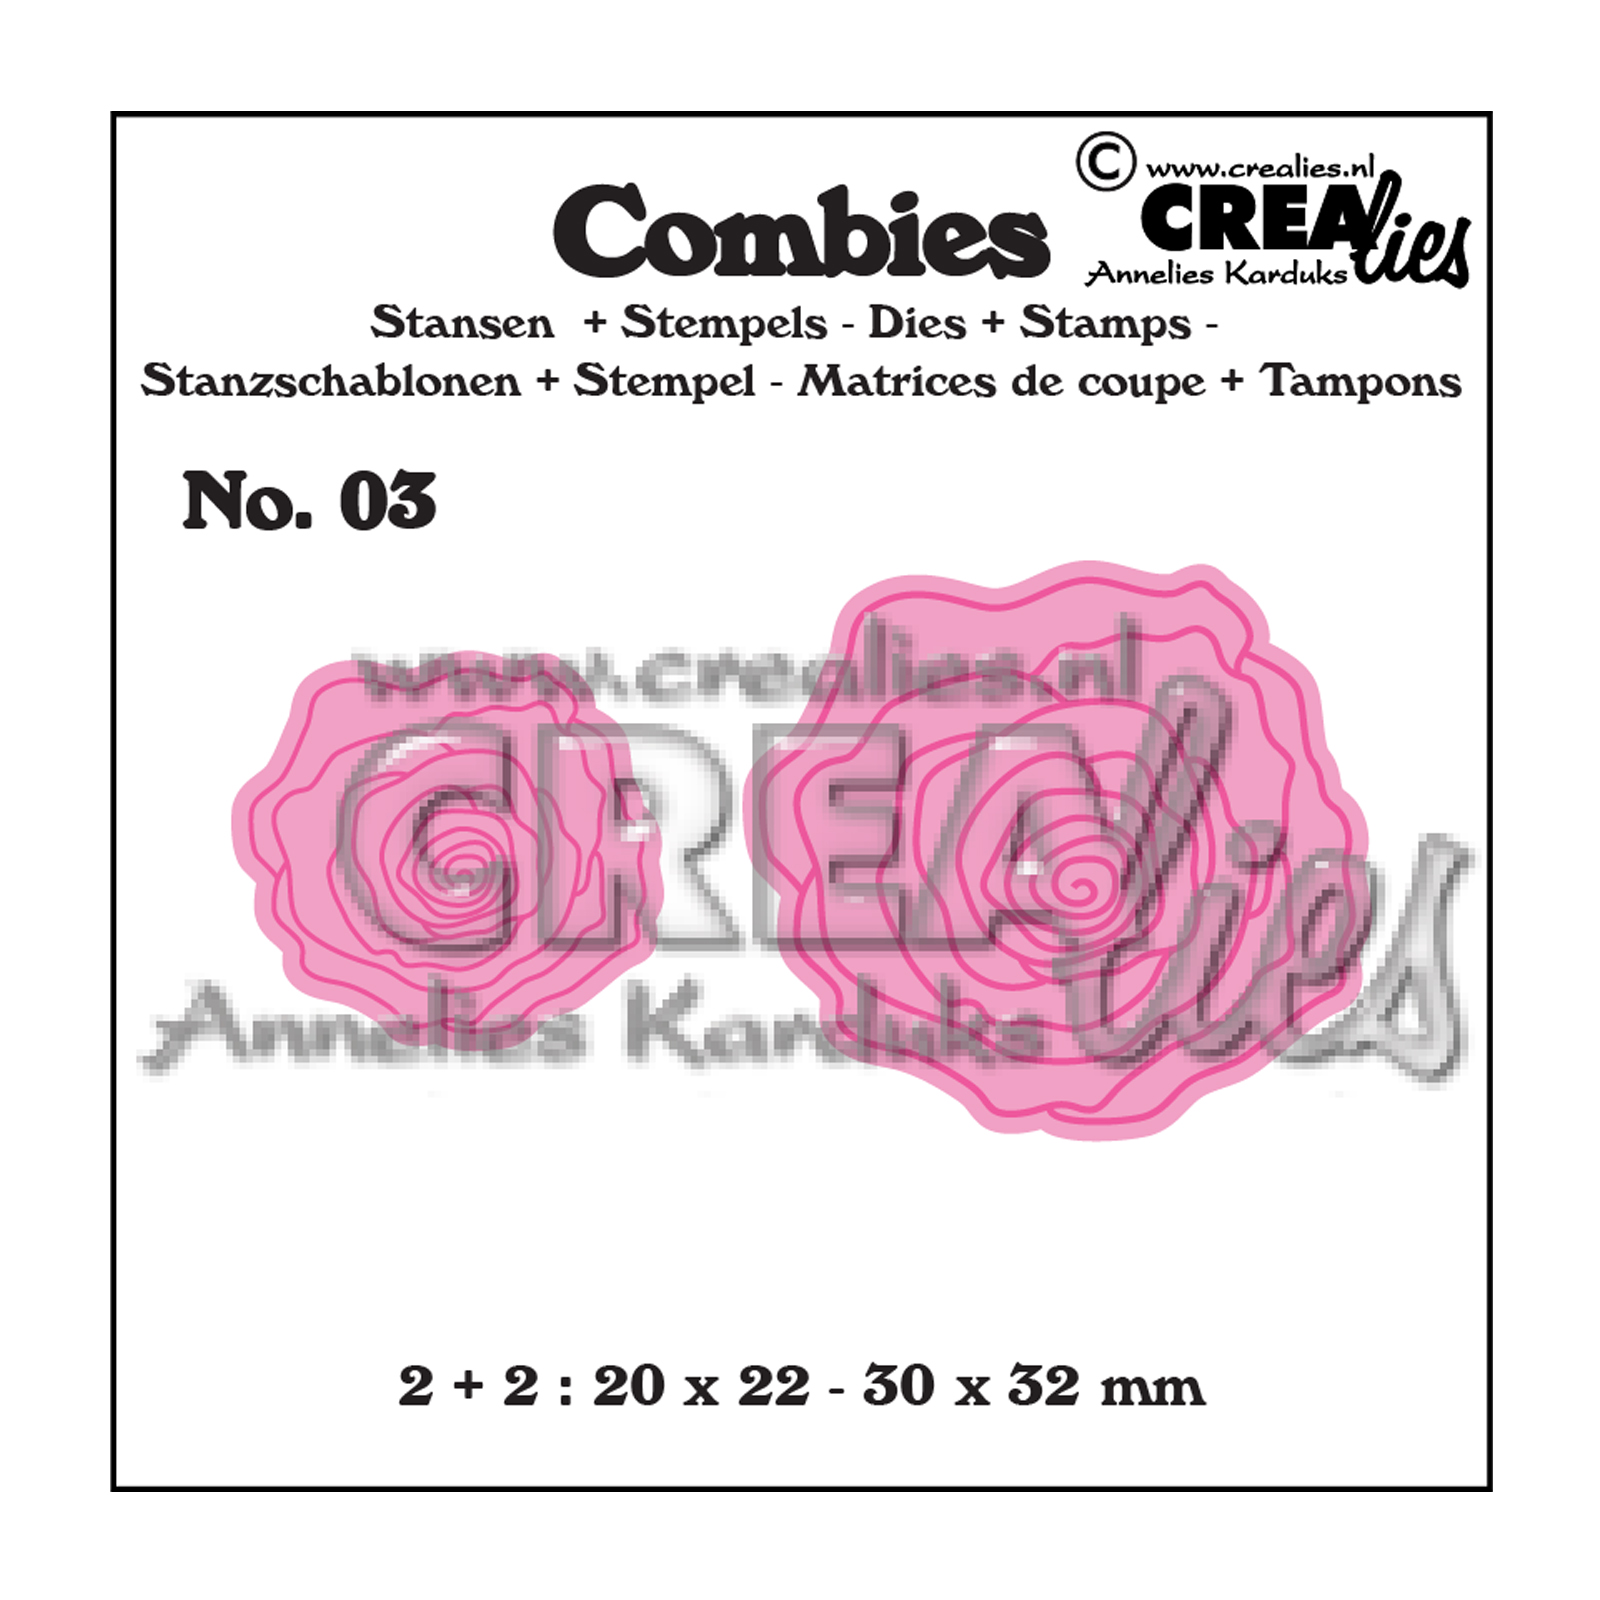 Crealies • Combies Stanzschablone & Stempelset no.03 Roses klein